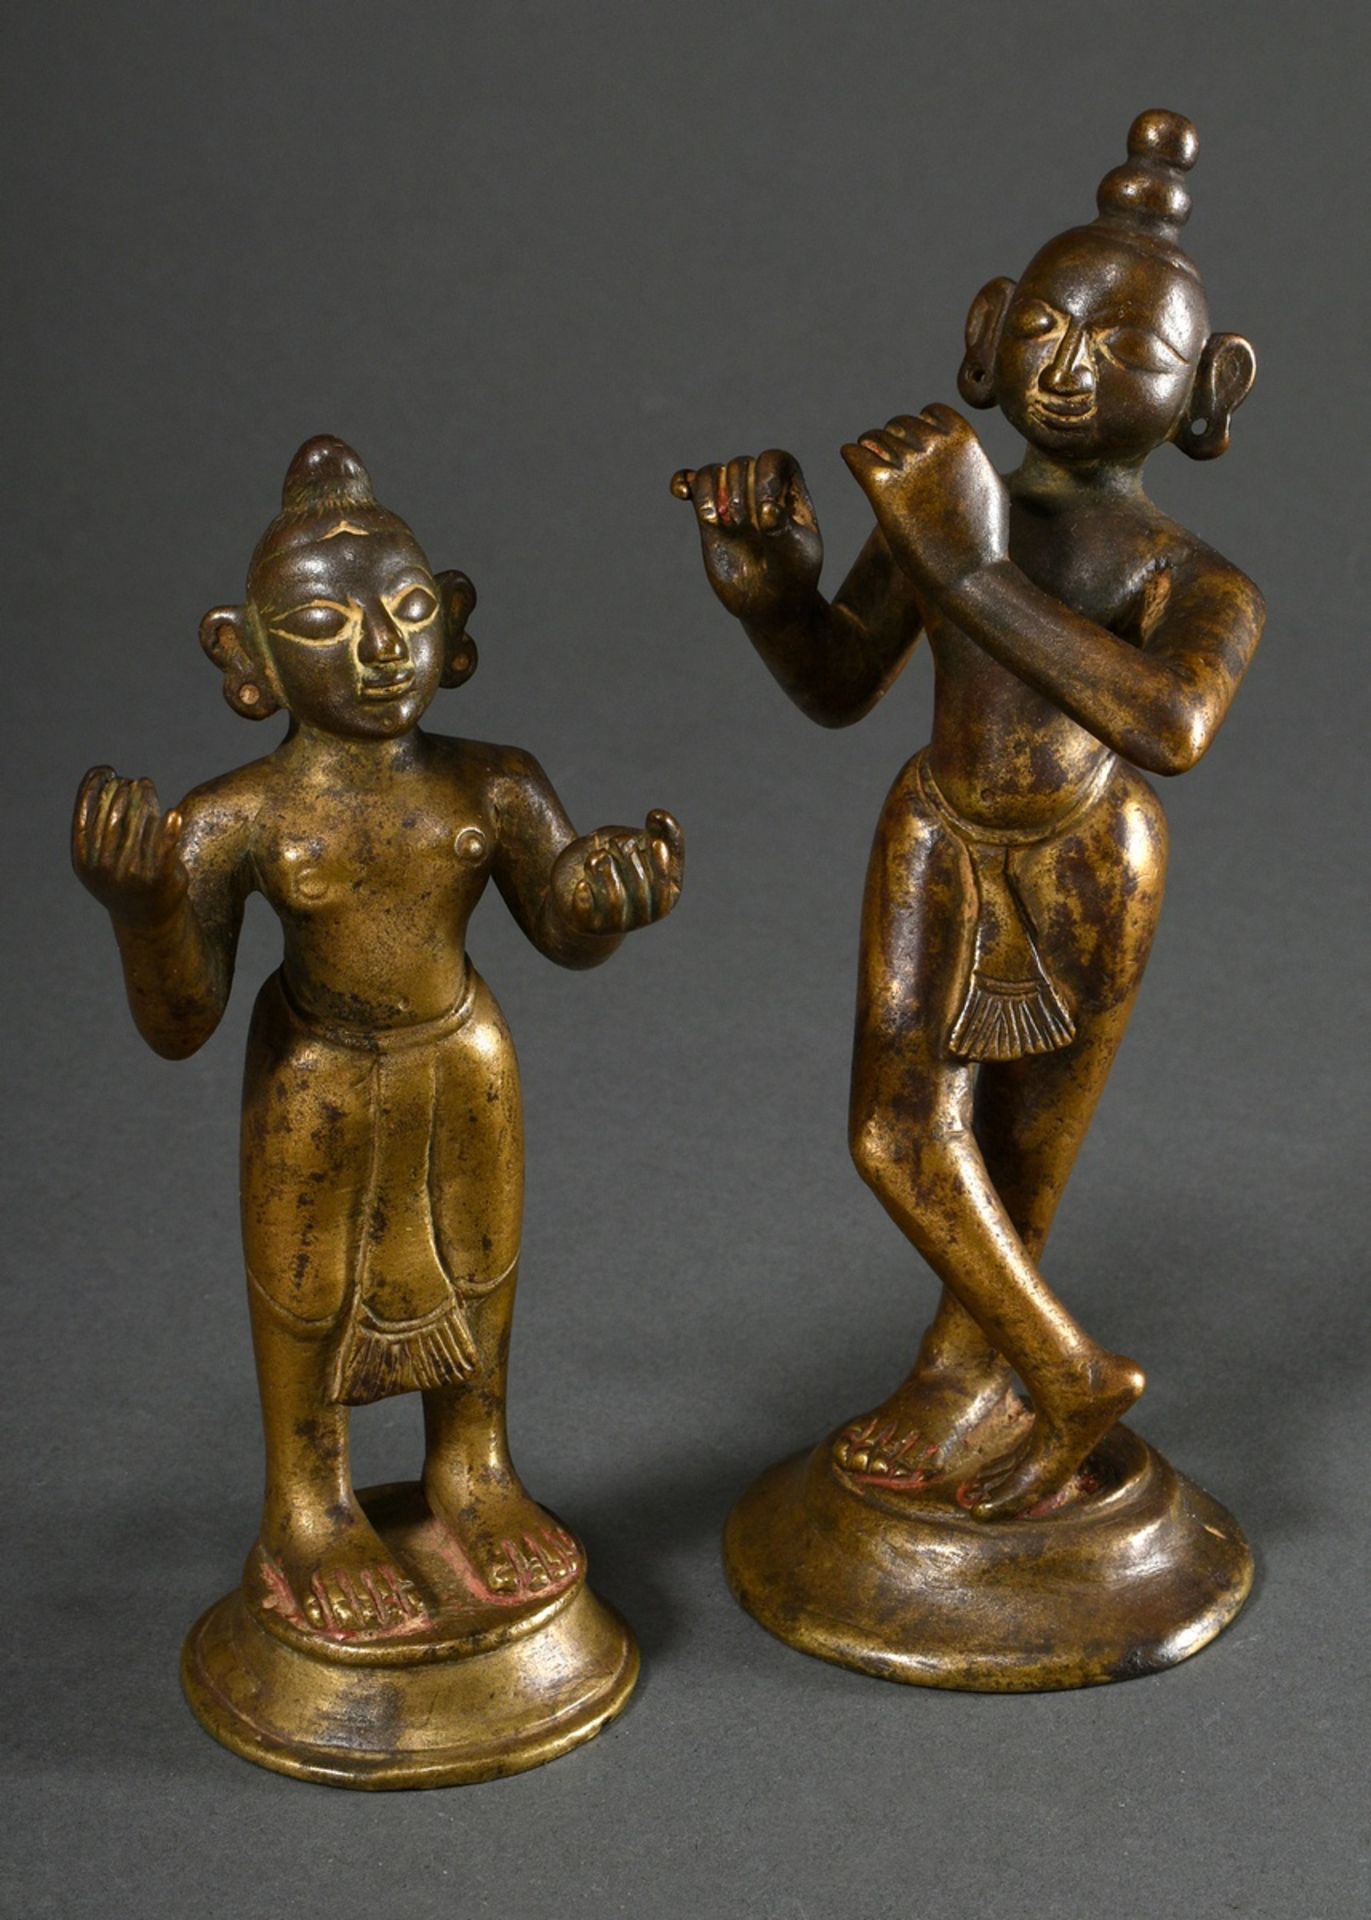 2 Fire-gilt bronze figures "Krishna Venugopola" and "Gopi Radha", India, probably 17th/18th century